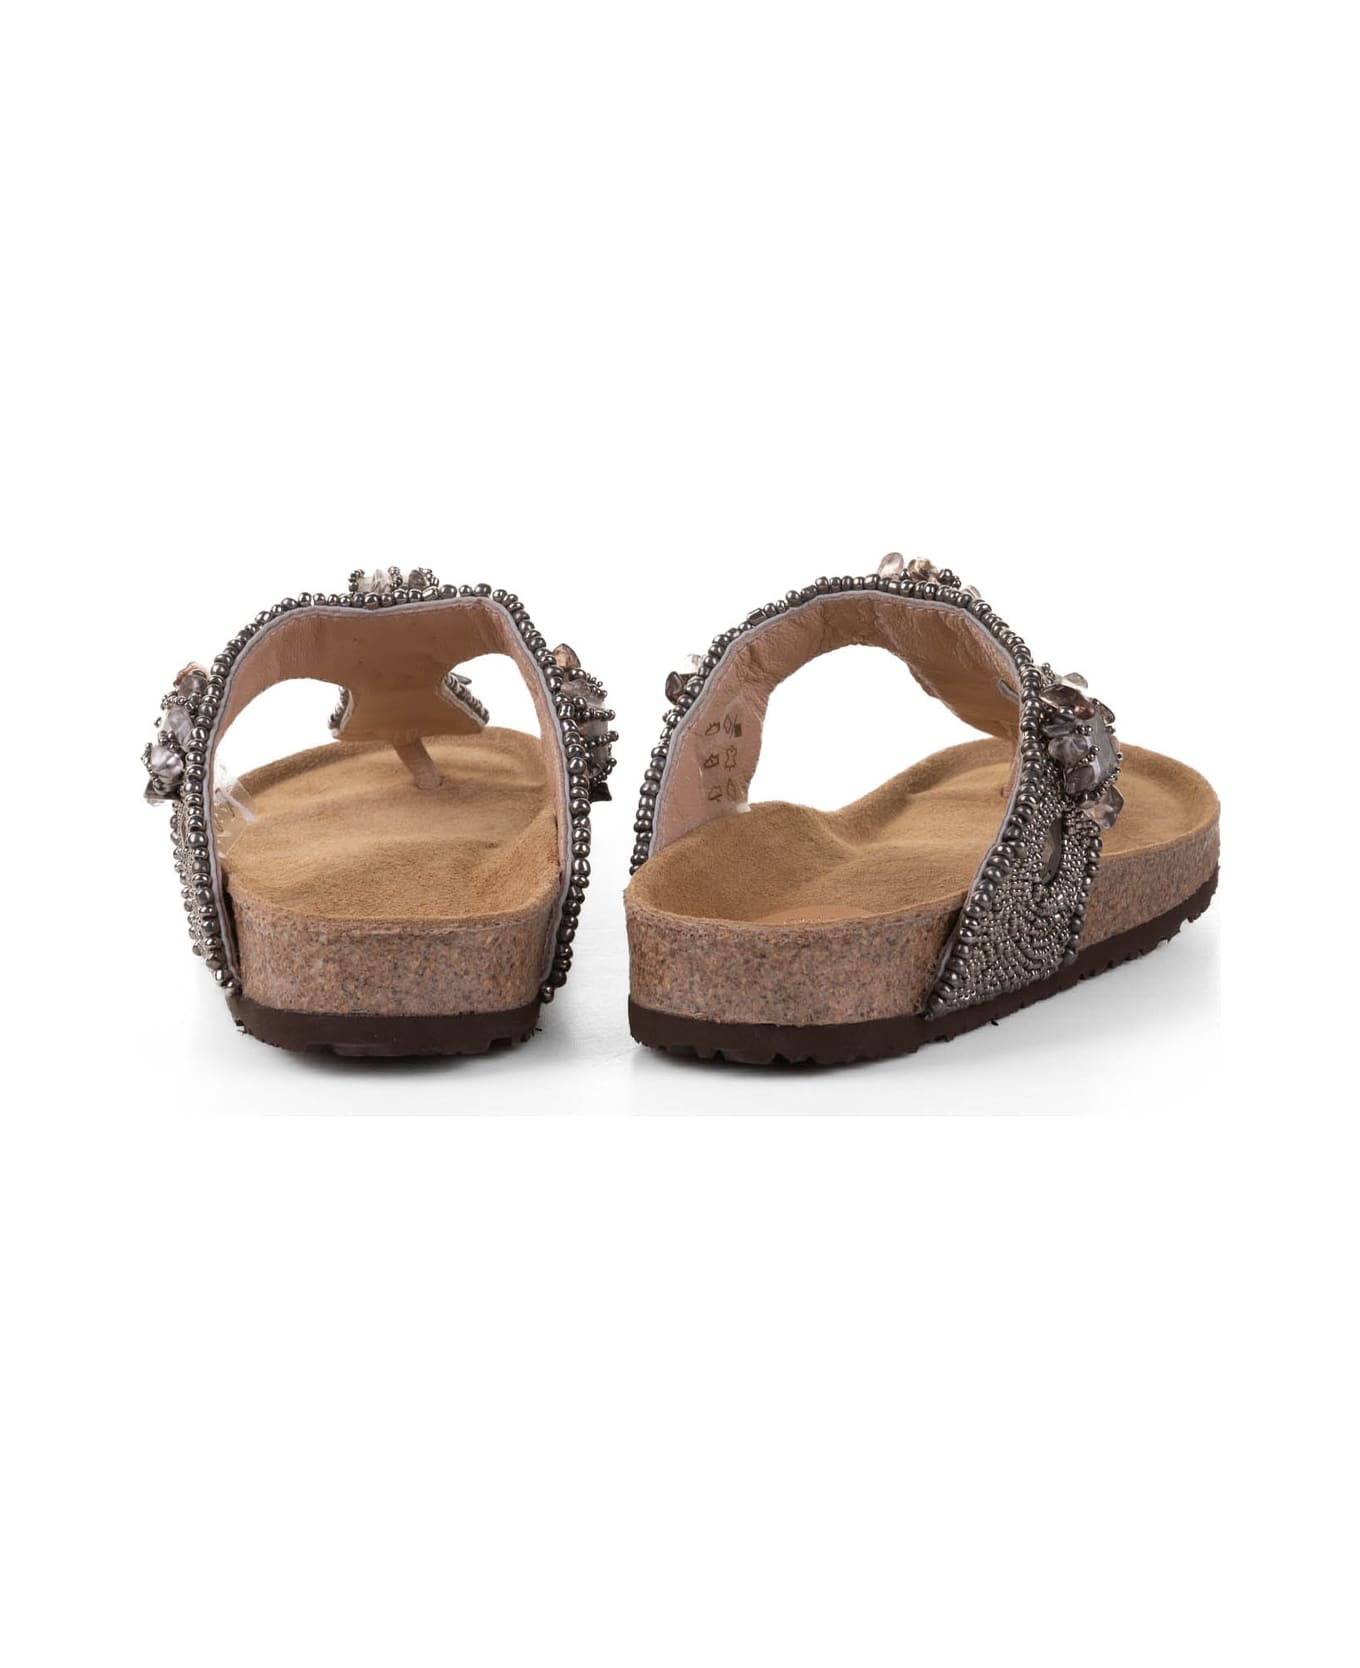 Malìparmi Flip-flop Sandal With Bijoux Embroidery - ARGENTO サンダル